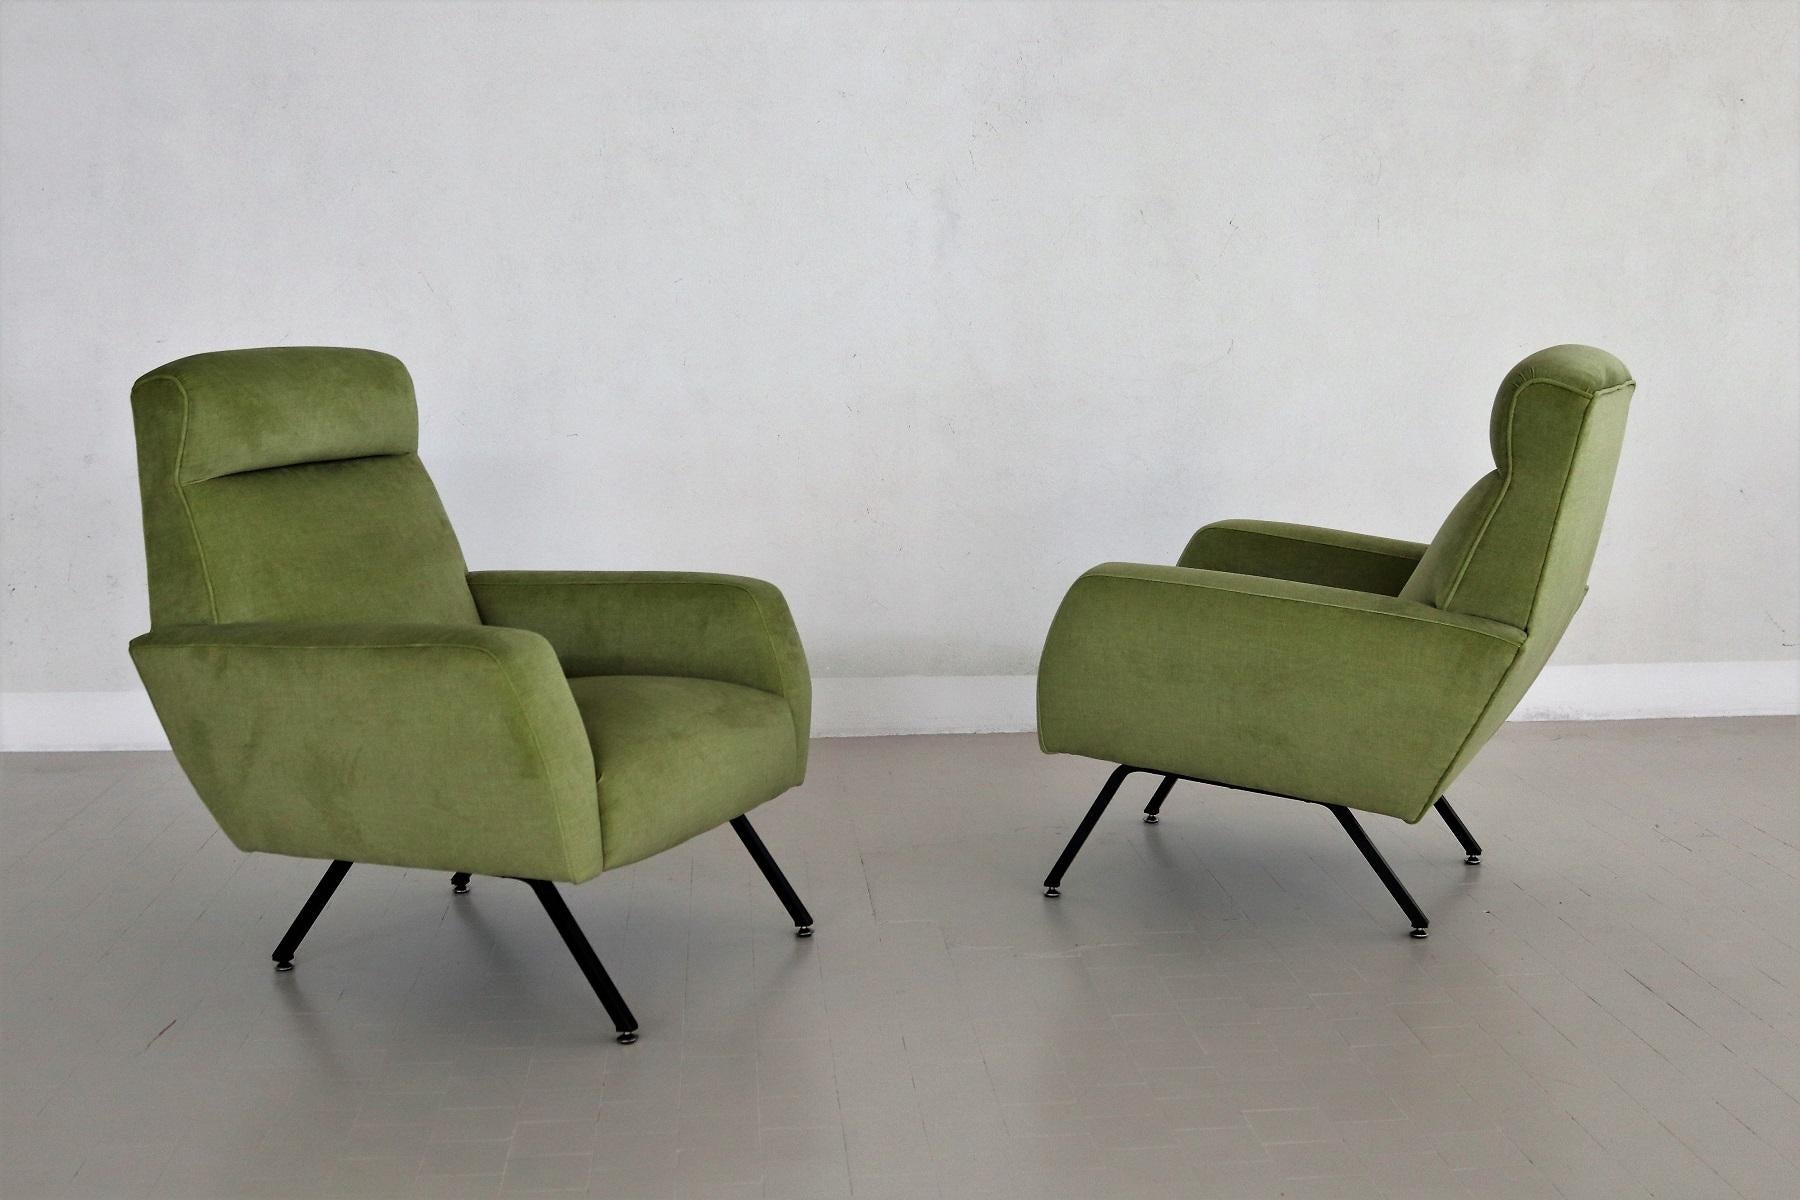 Mid-20th Century Italian Midcentury Armchairs Re-Upholstered in Green Velvet, 1960s For Sale